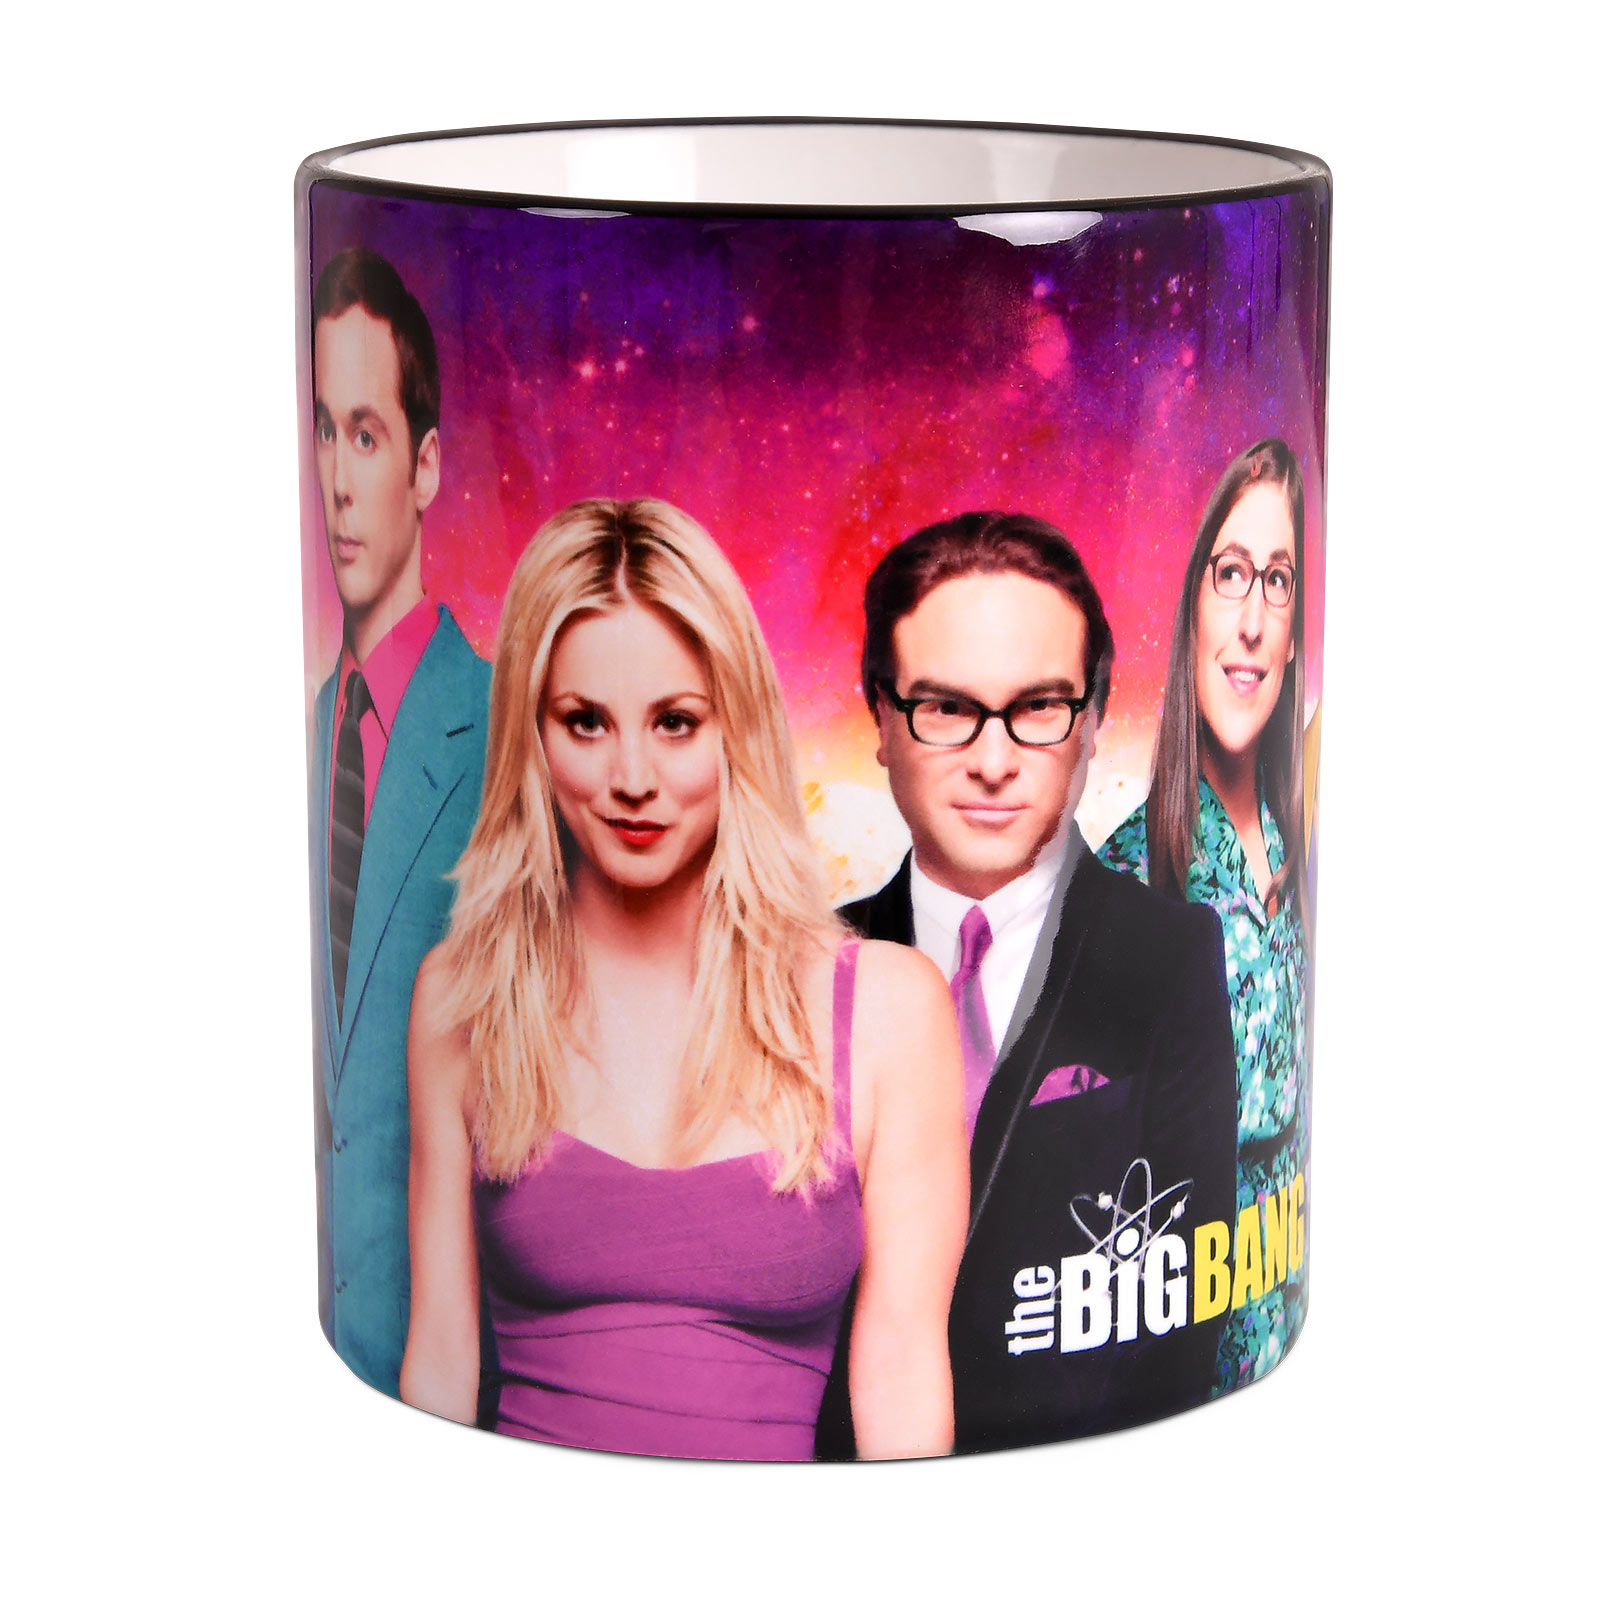 Big Bang Theory - Tasse Collage